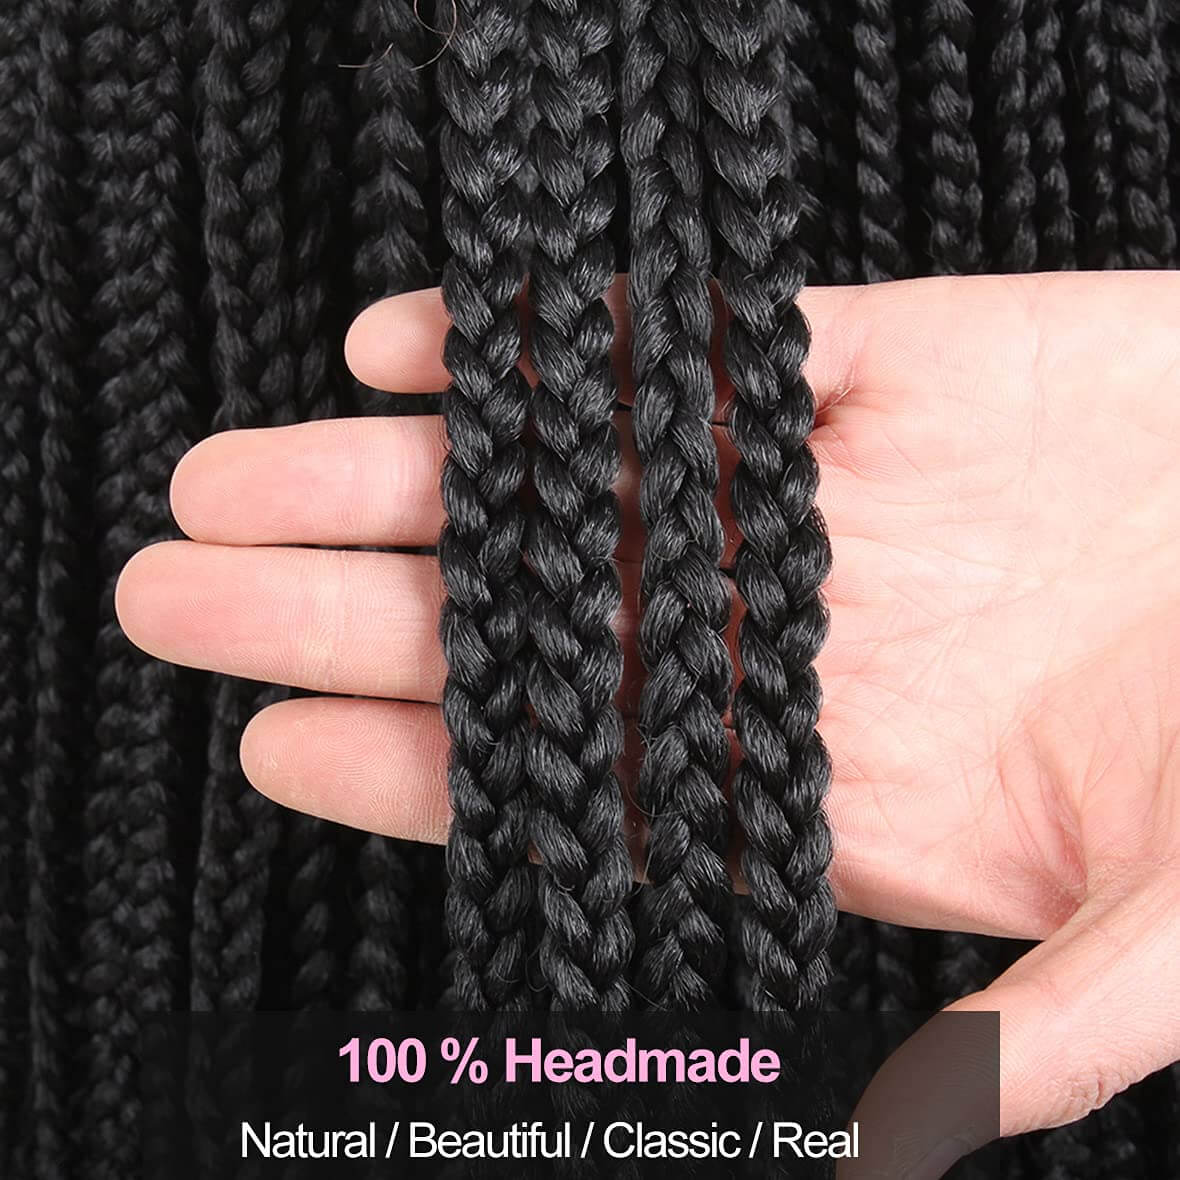 Xtrend 30 Inch Box Braids Crochet Hair Pre-looped Crochet Hair Ombre Knotless Box Braids Extensions